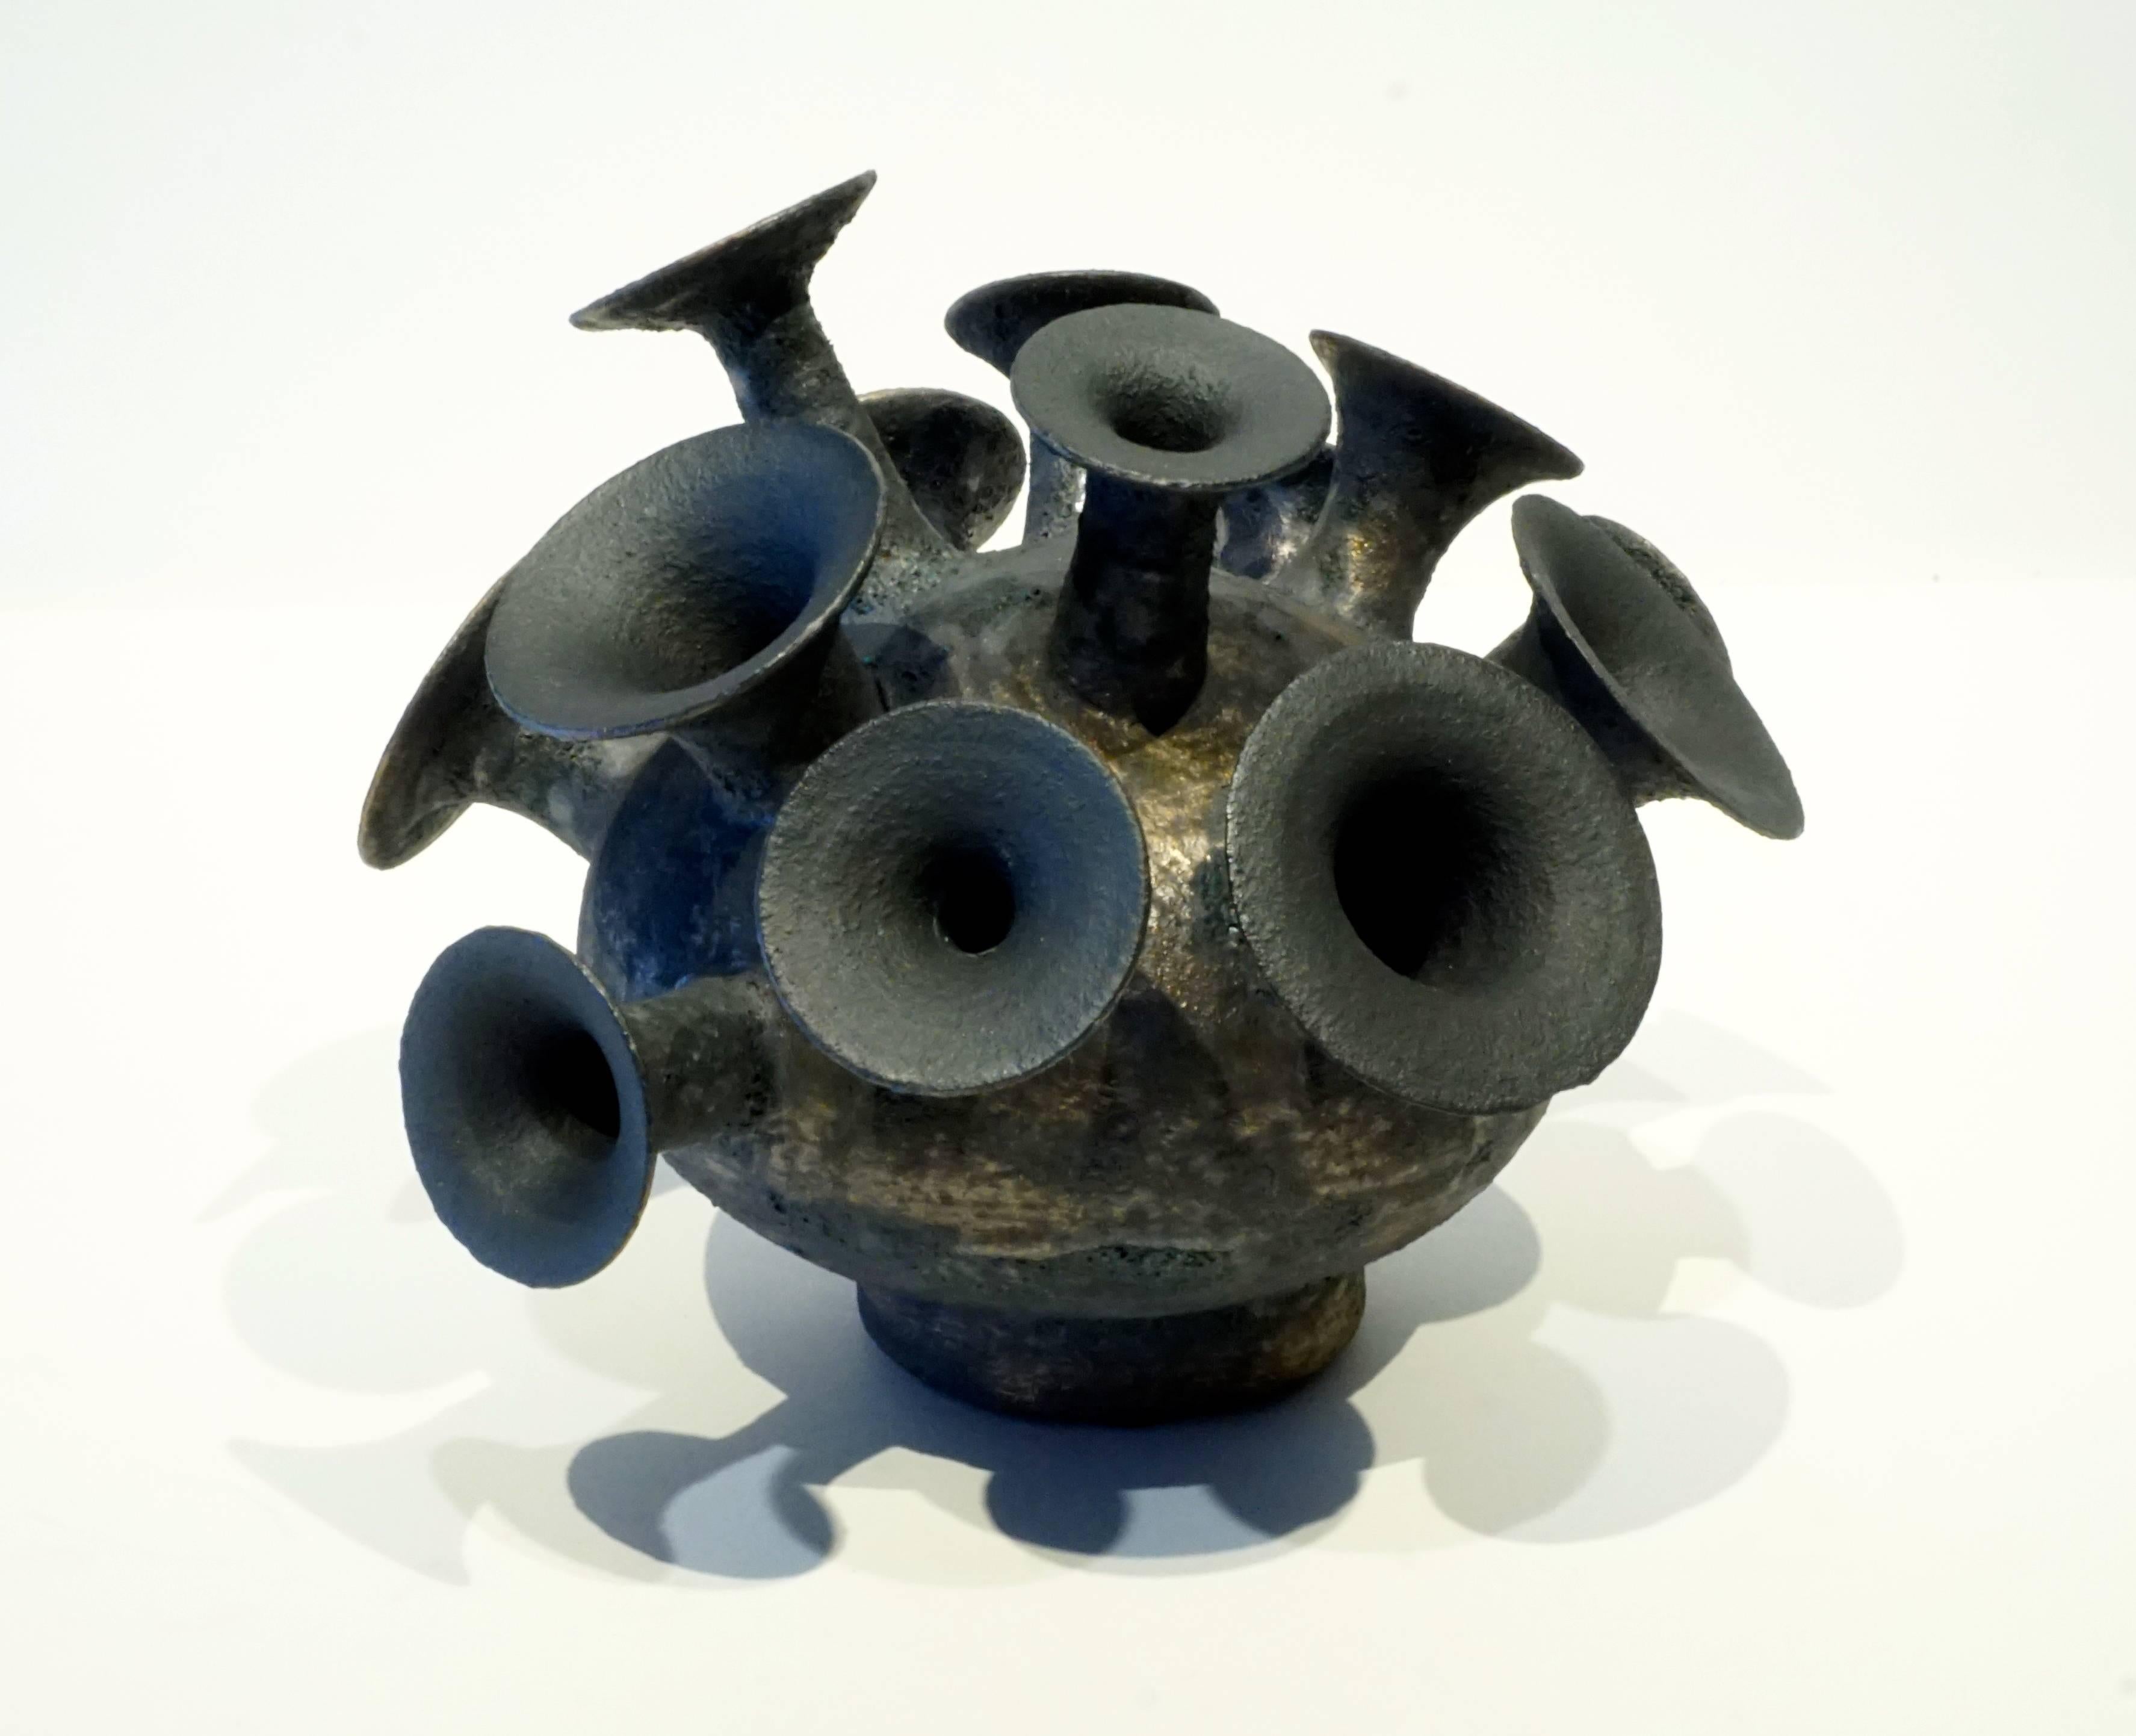 A dynamic multi spout sculptural ceramic vessel by American studio potter Jeremy Gercke.